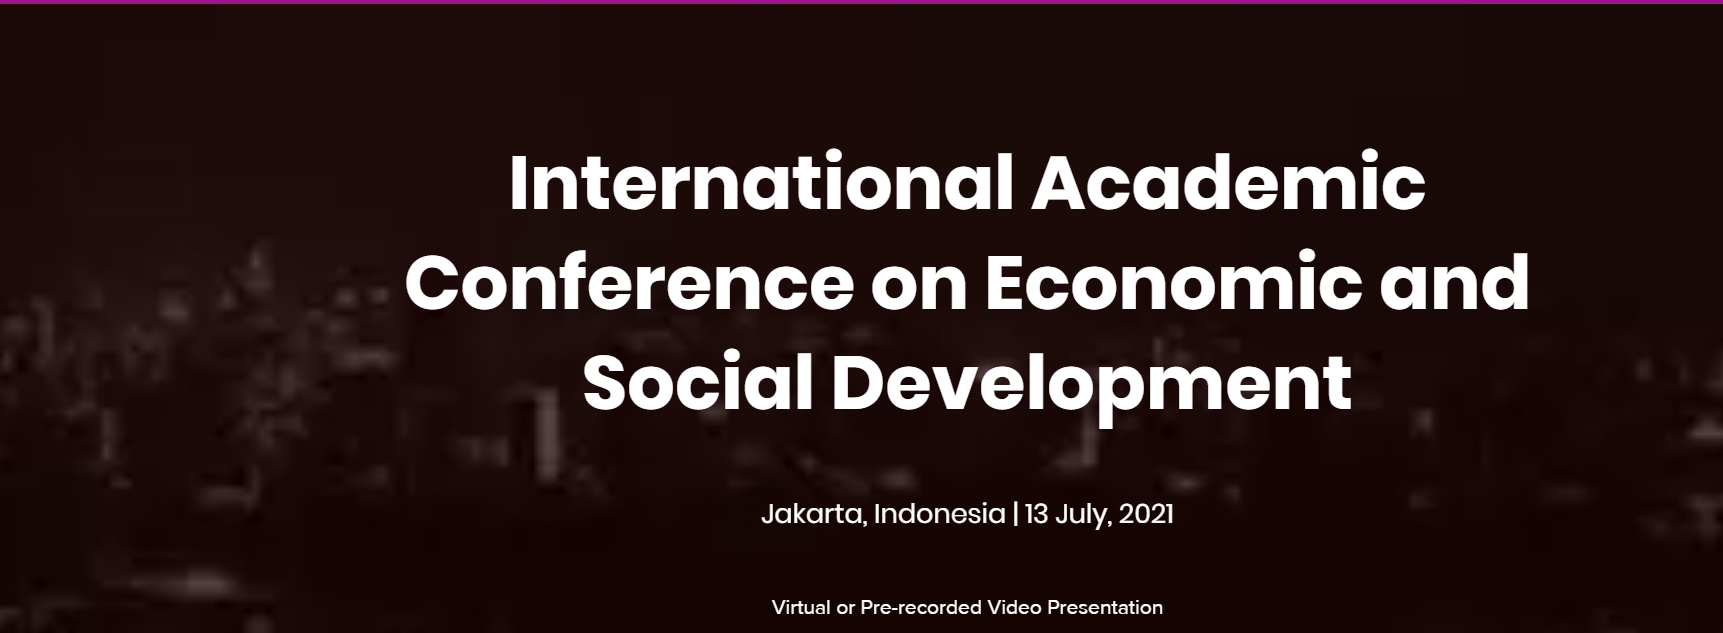 International Academic Conference on Economic and Social Development, Jakarta, Indonesia,Jakarta,Indonesia